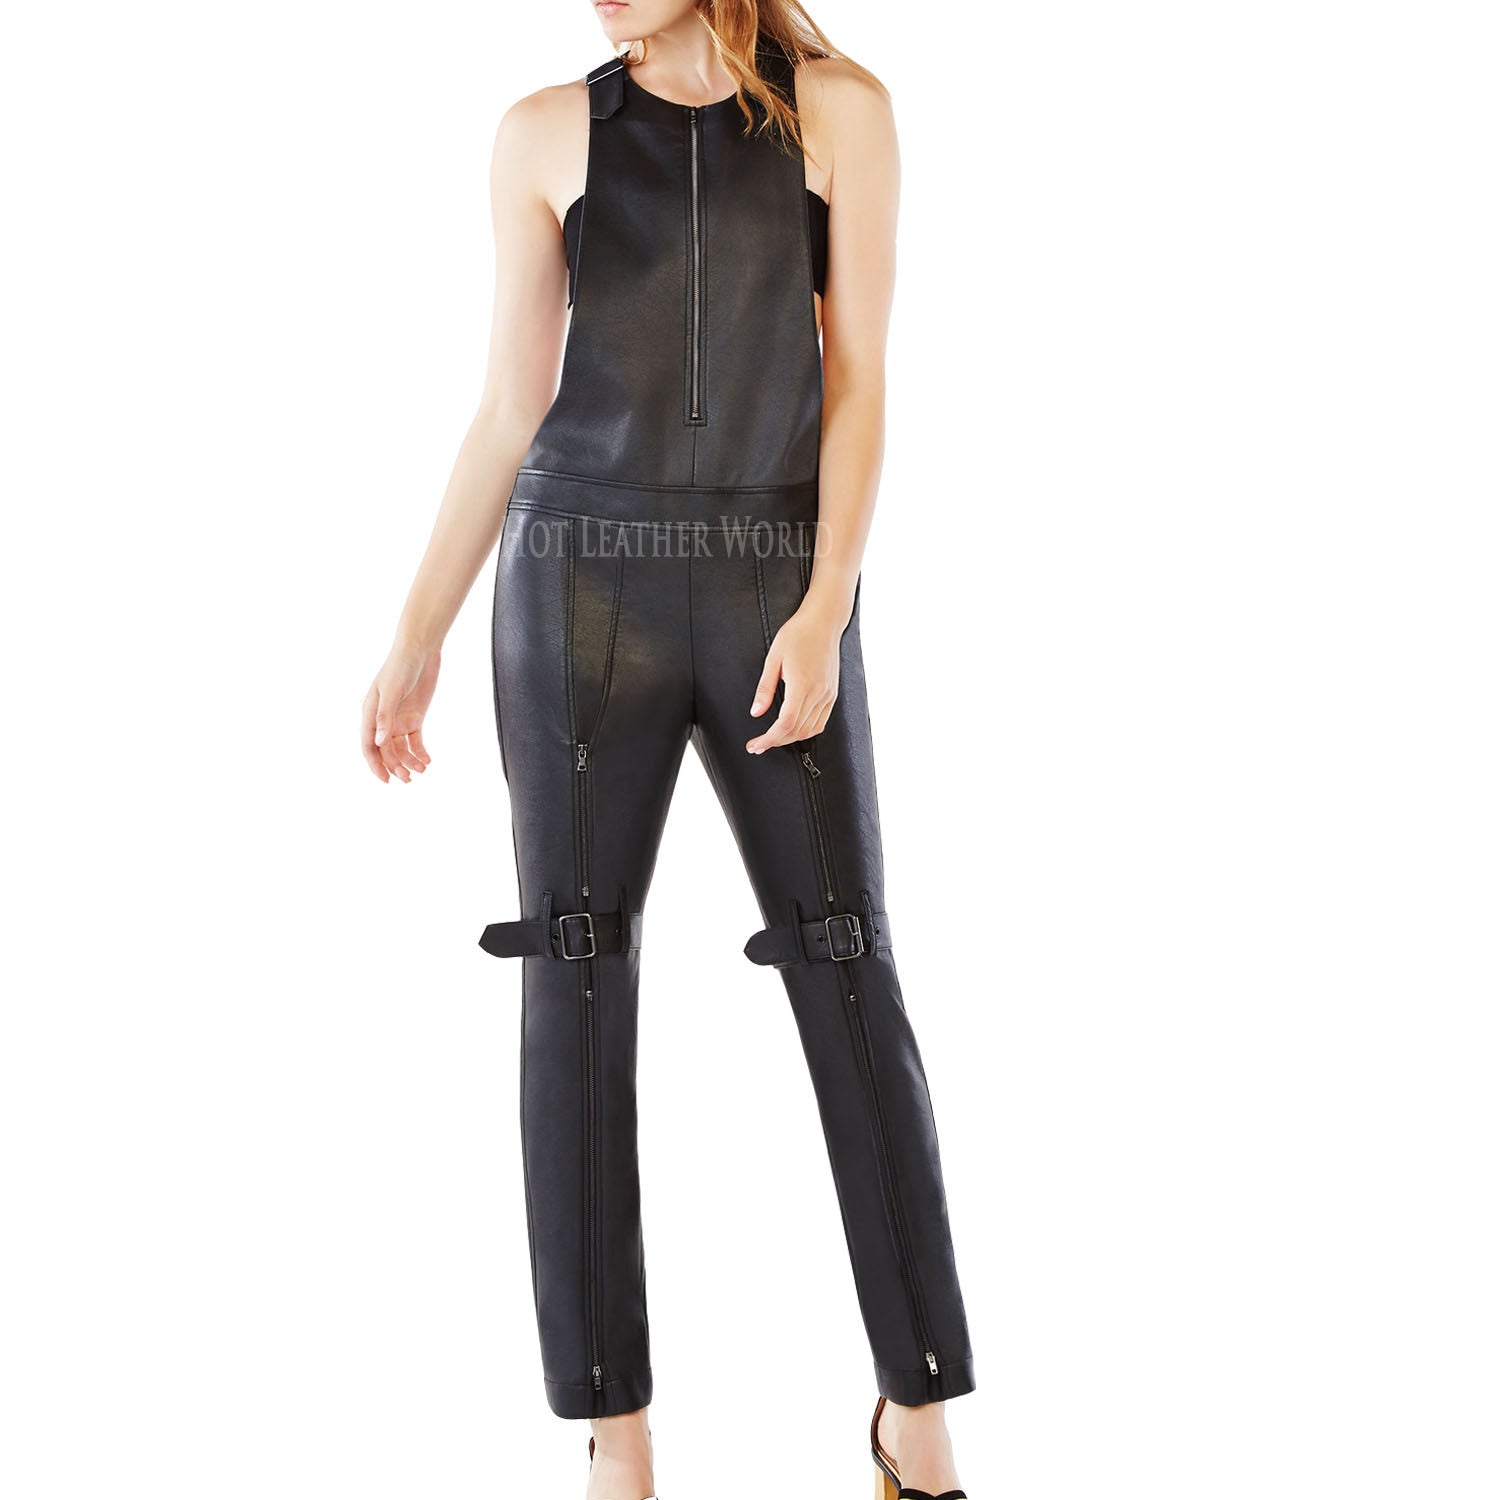 Leather Jumpsuit For Women -  HOTLEATHERWORLD